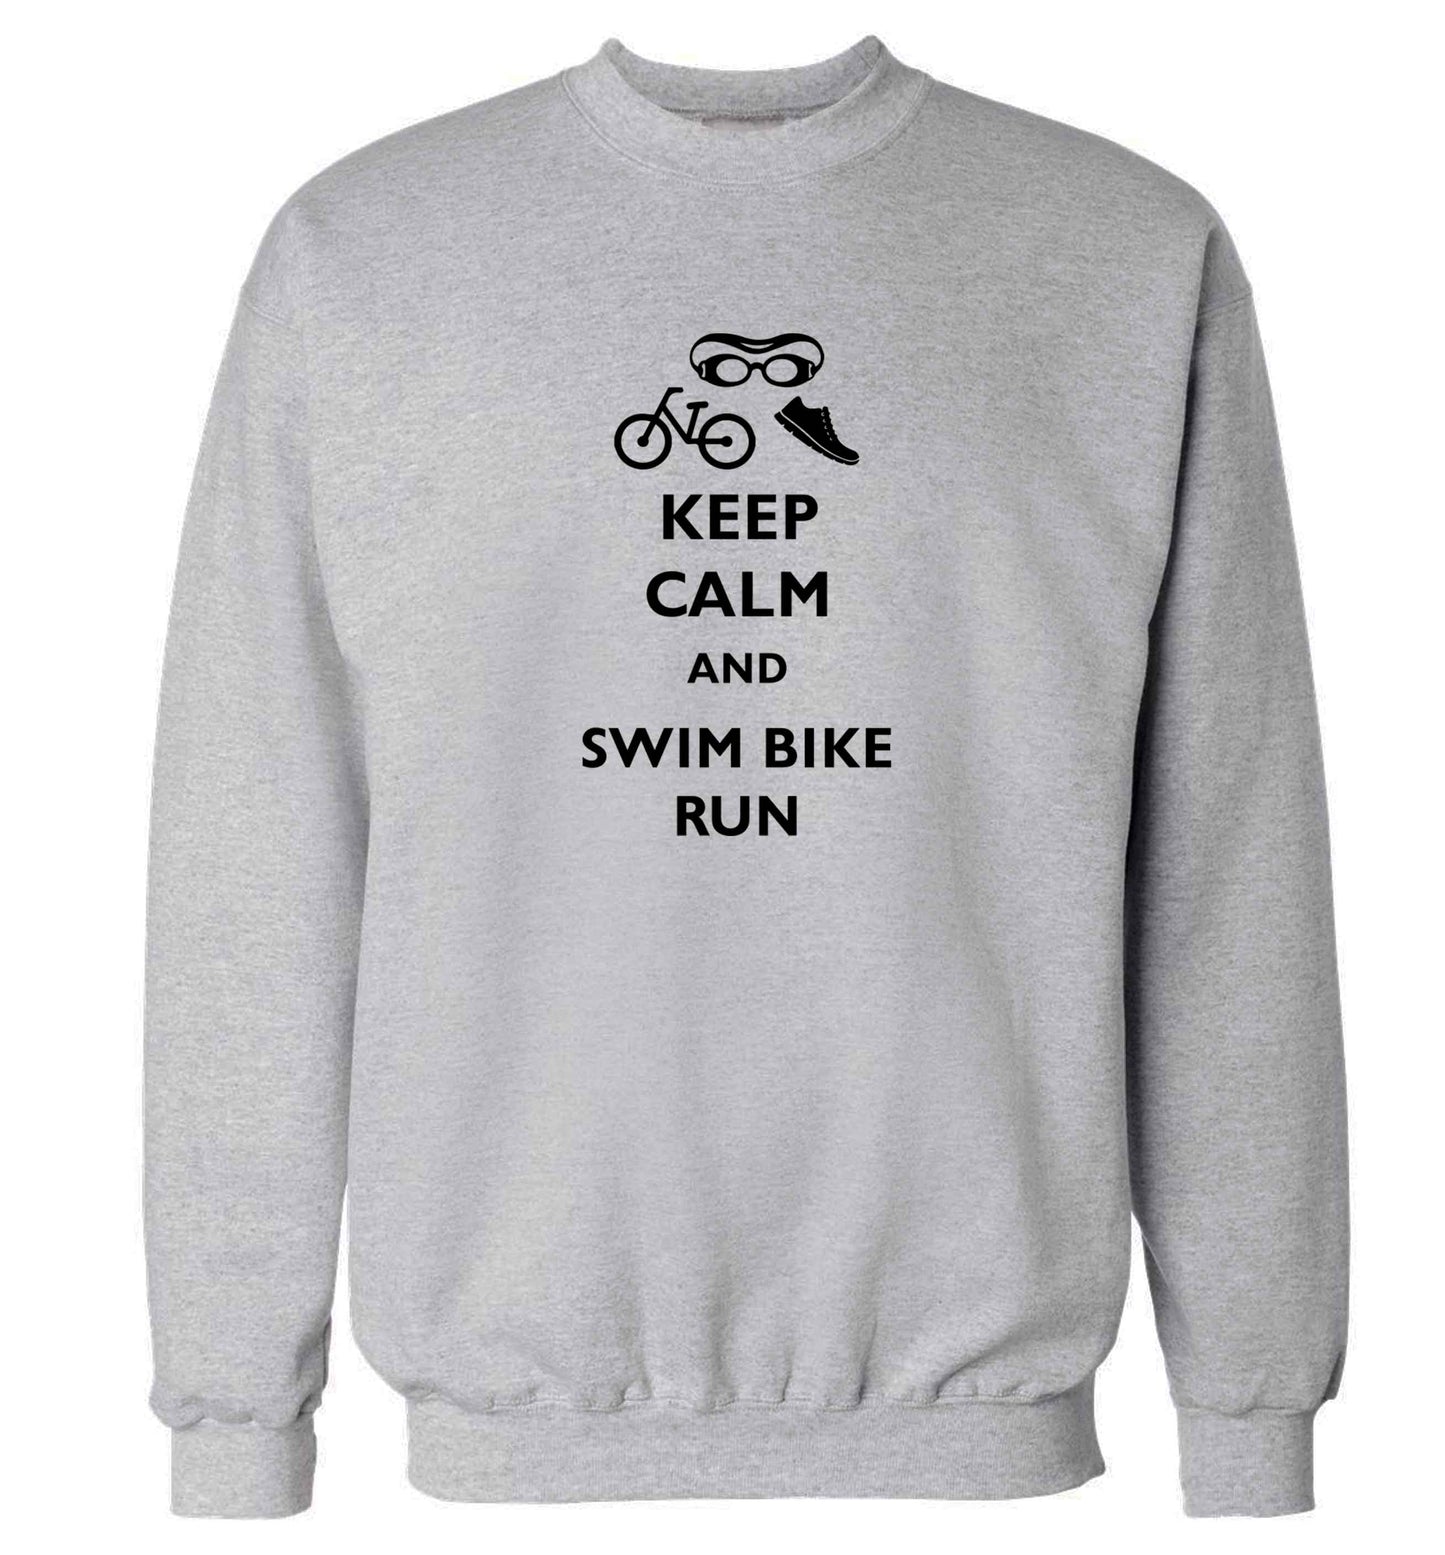 Keep calm and swim bike run adult's unisex grey sweater 2XL